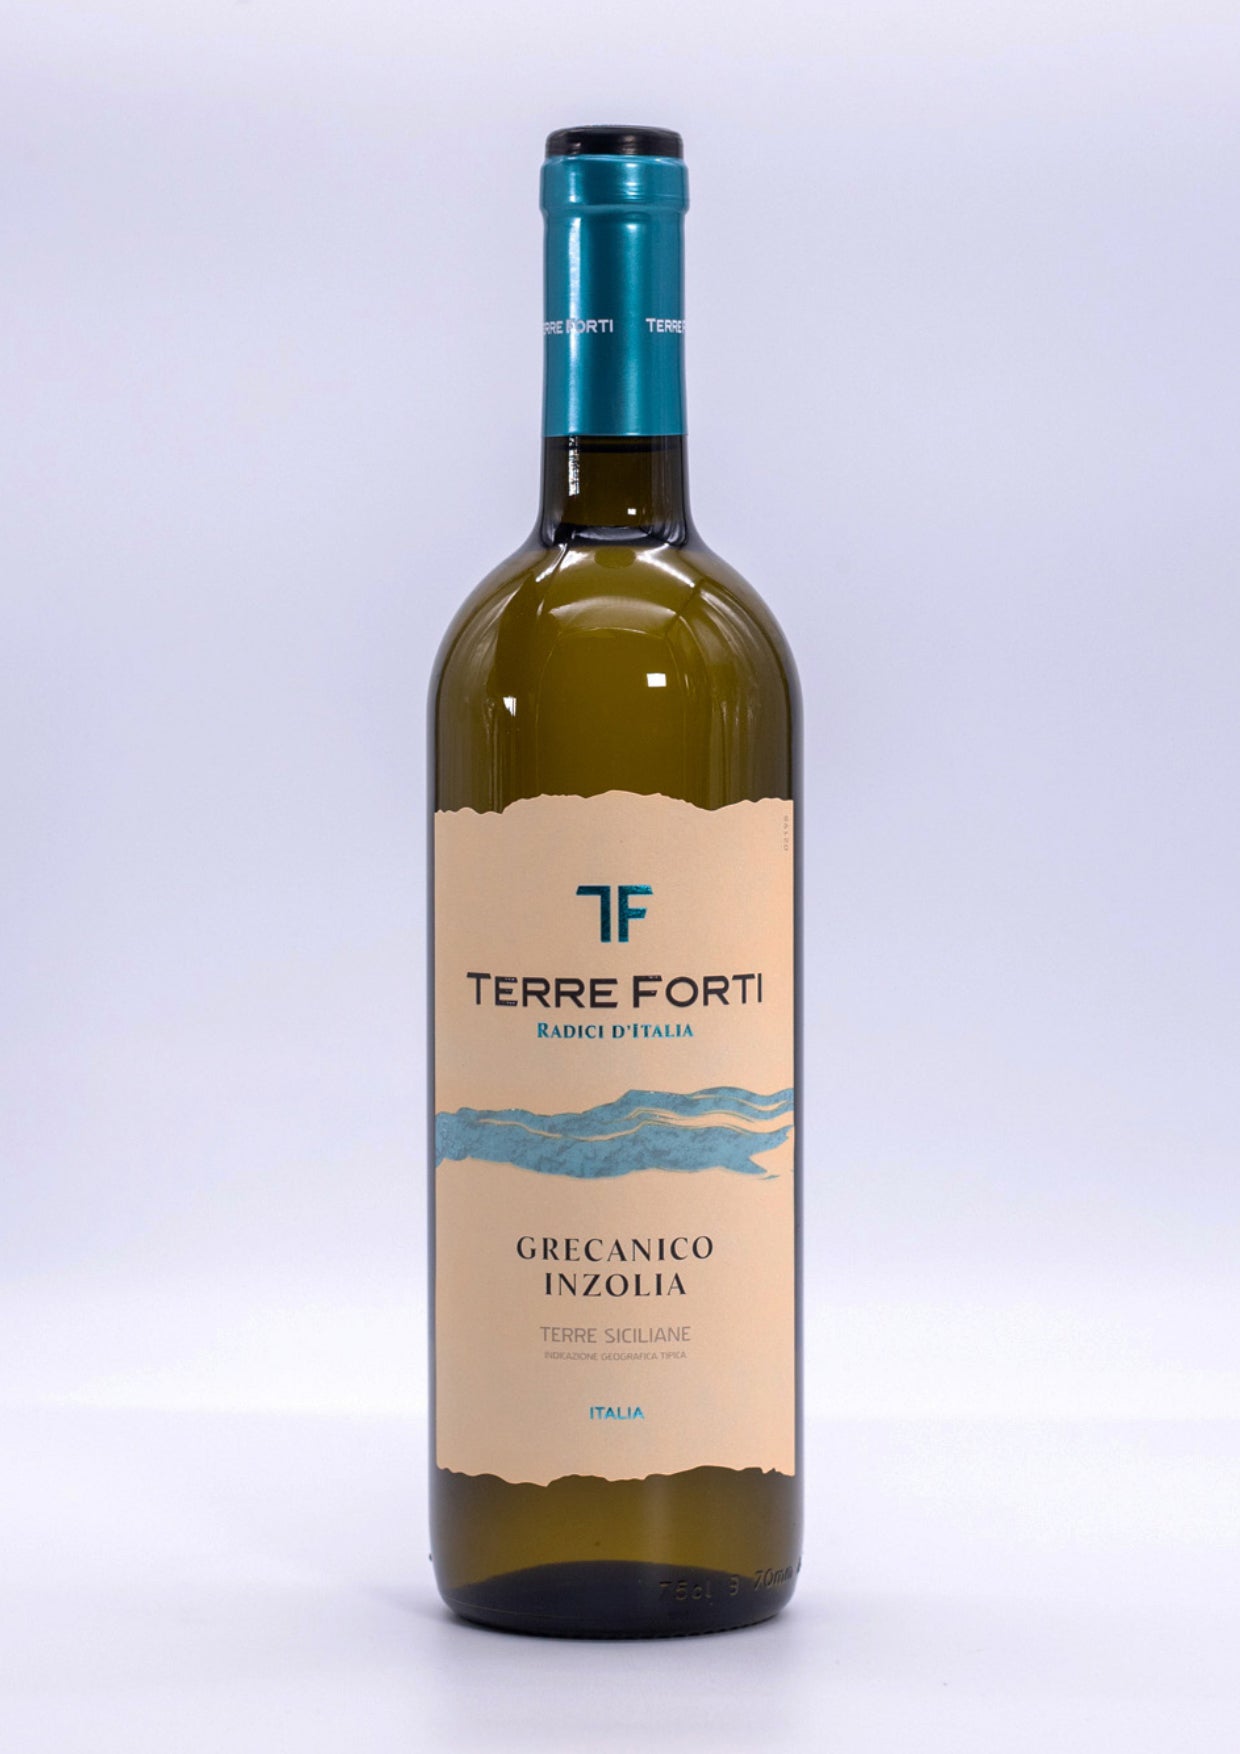 Grecanico-Pinot Terre Siciliane IGT